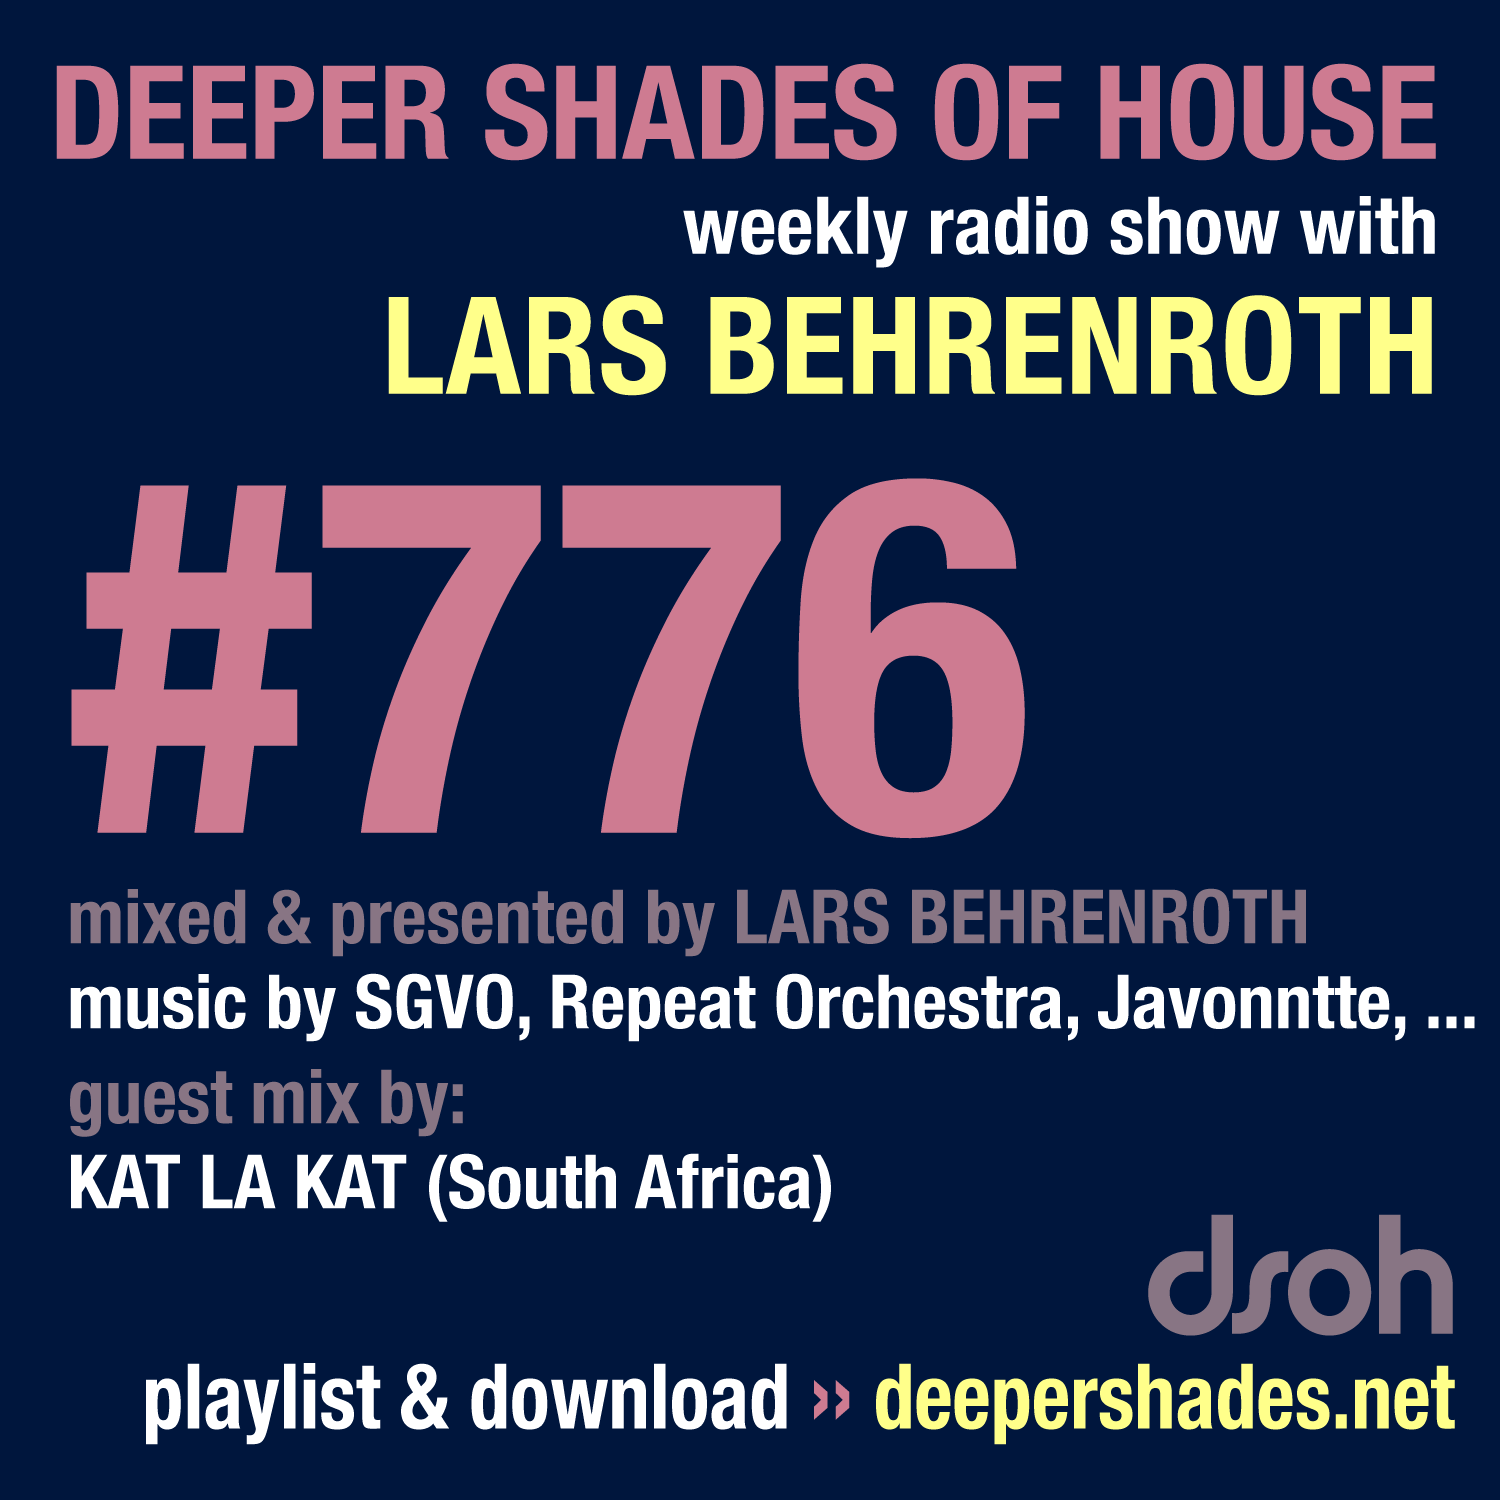 Deep House Radio Show Deeper Shades Of House 776